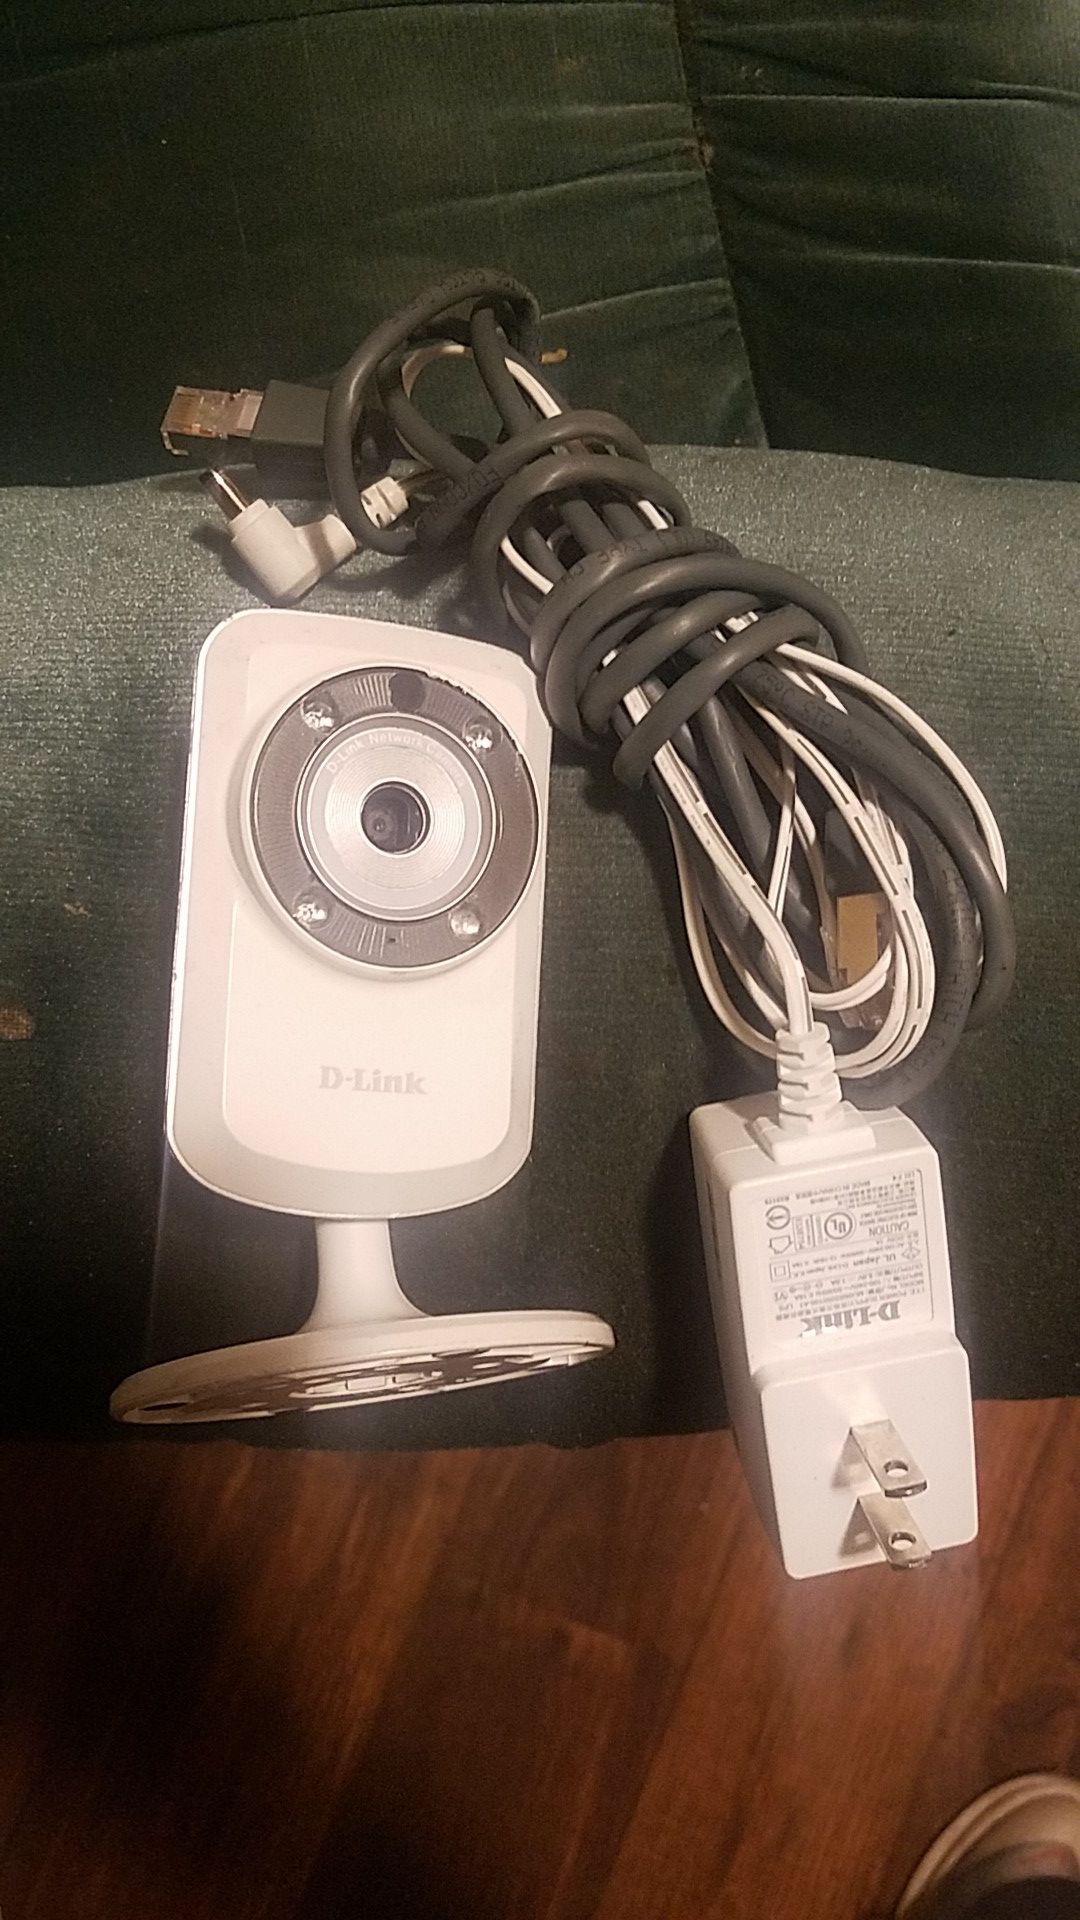 D-link security camera